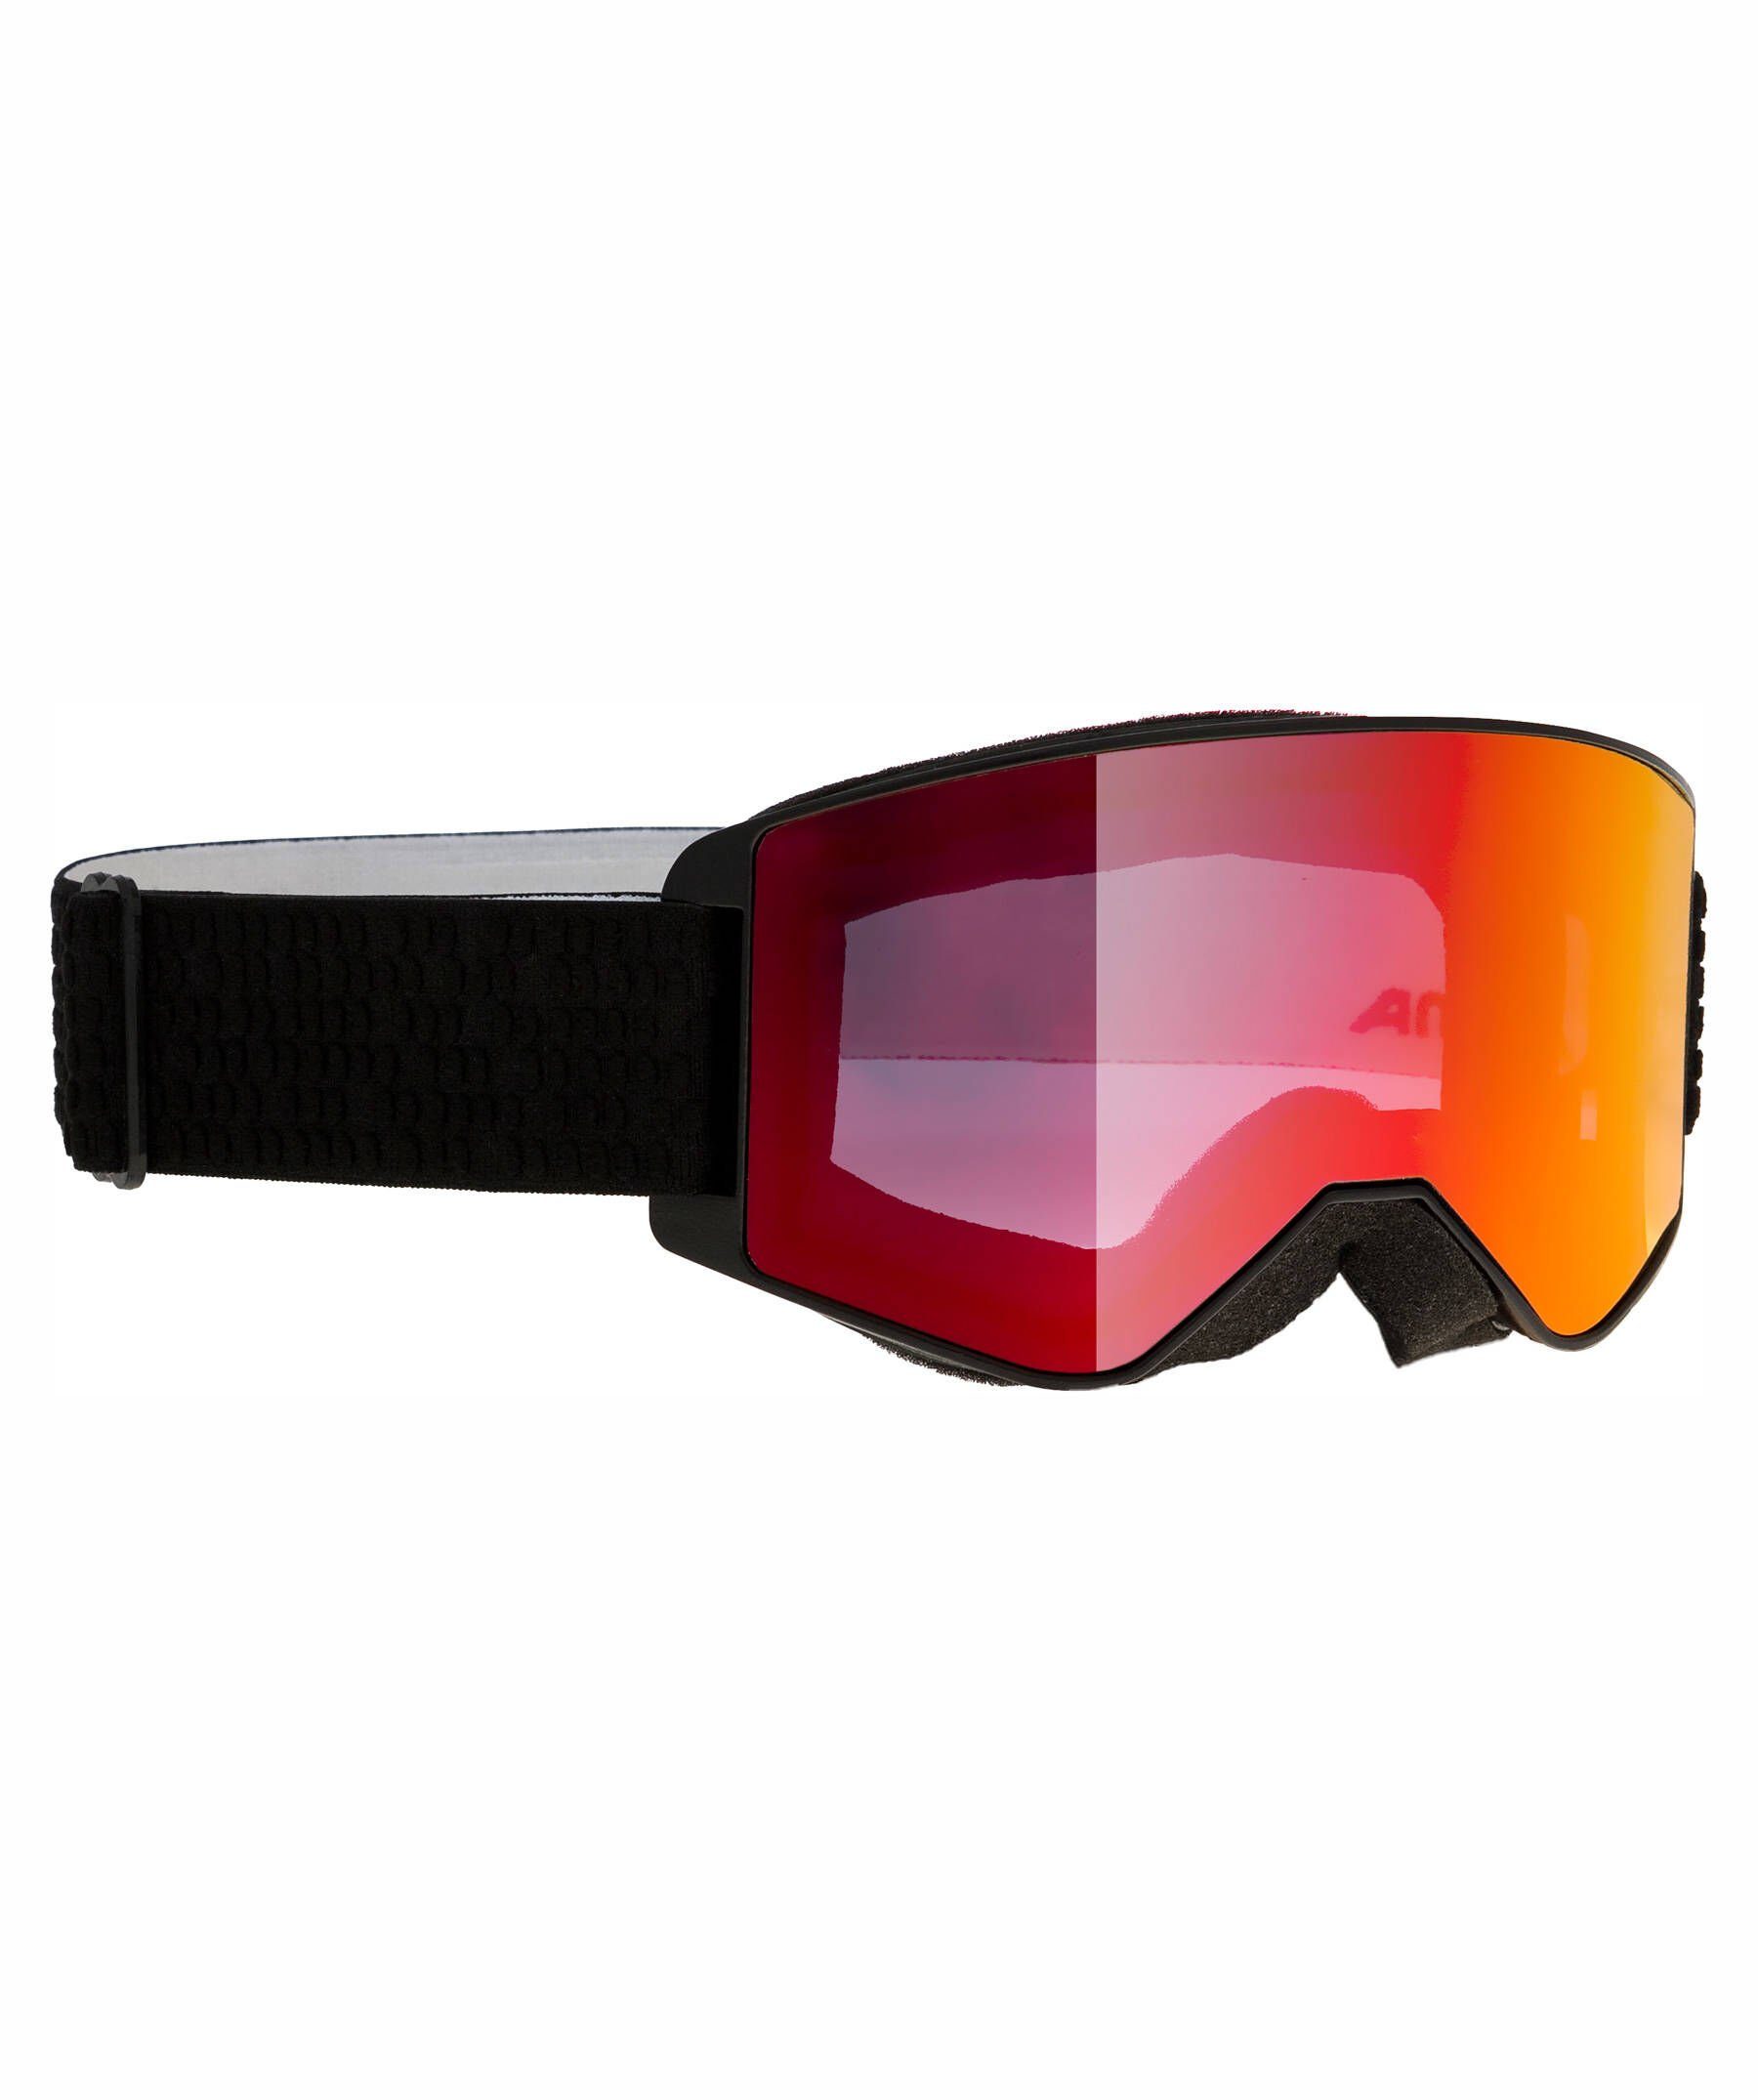 Alpina Skibrille (704) "Narkoja" Sports schwarz/orange Skibrille